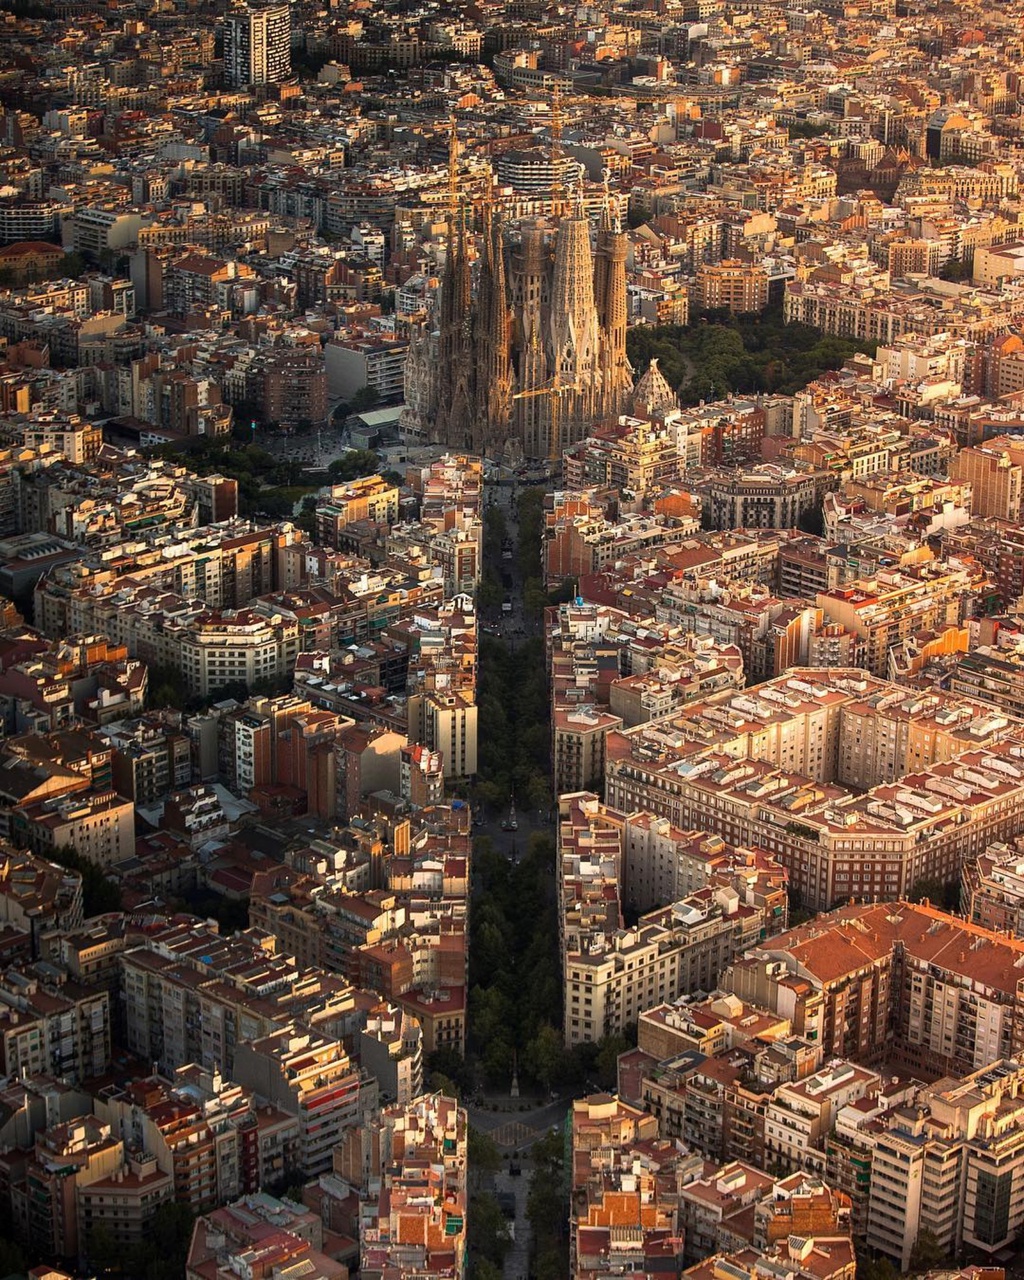 Dan sao ‘Ky sinh trung’ tung du lich o dau? hinh anh 6 Barcelona_Architecture_Virginia_Duran_6_Sagrada_Familia.jpg